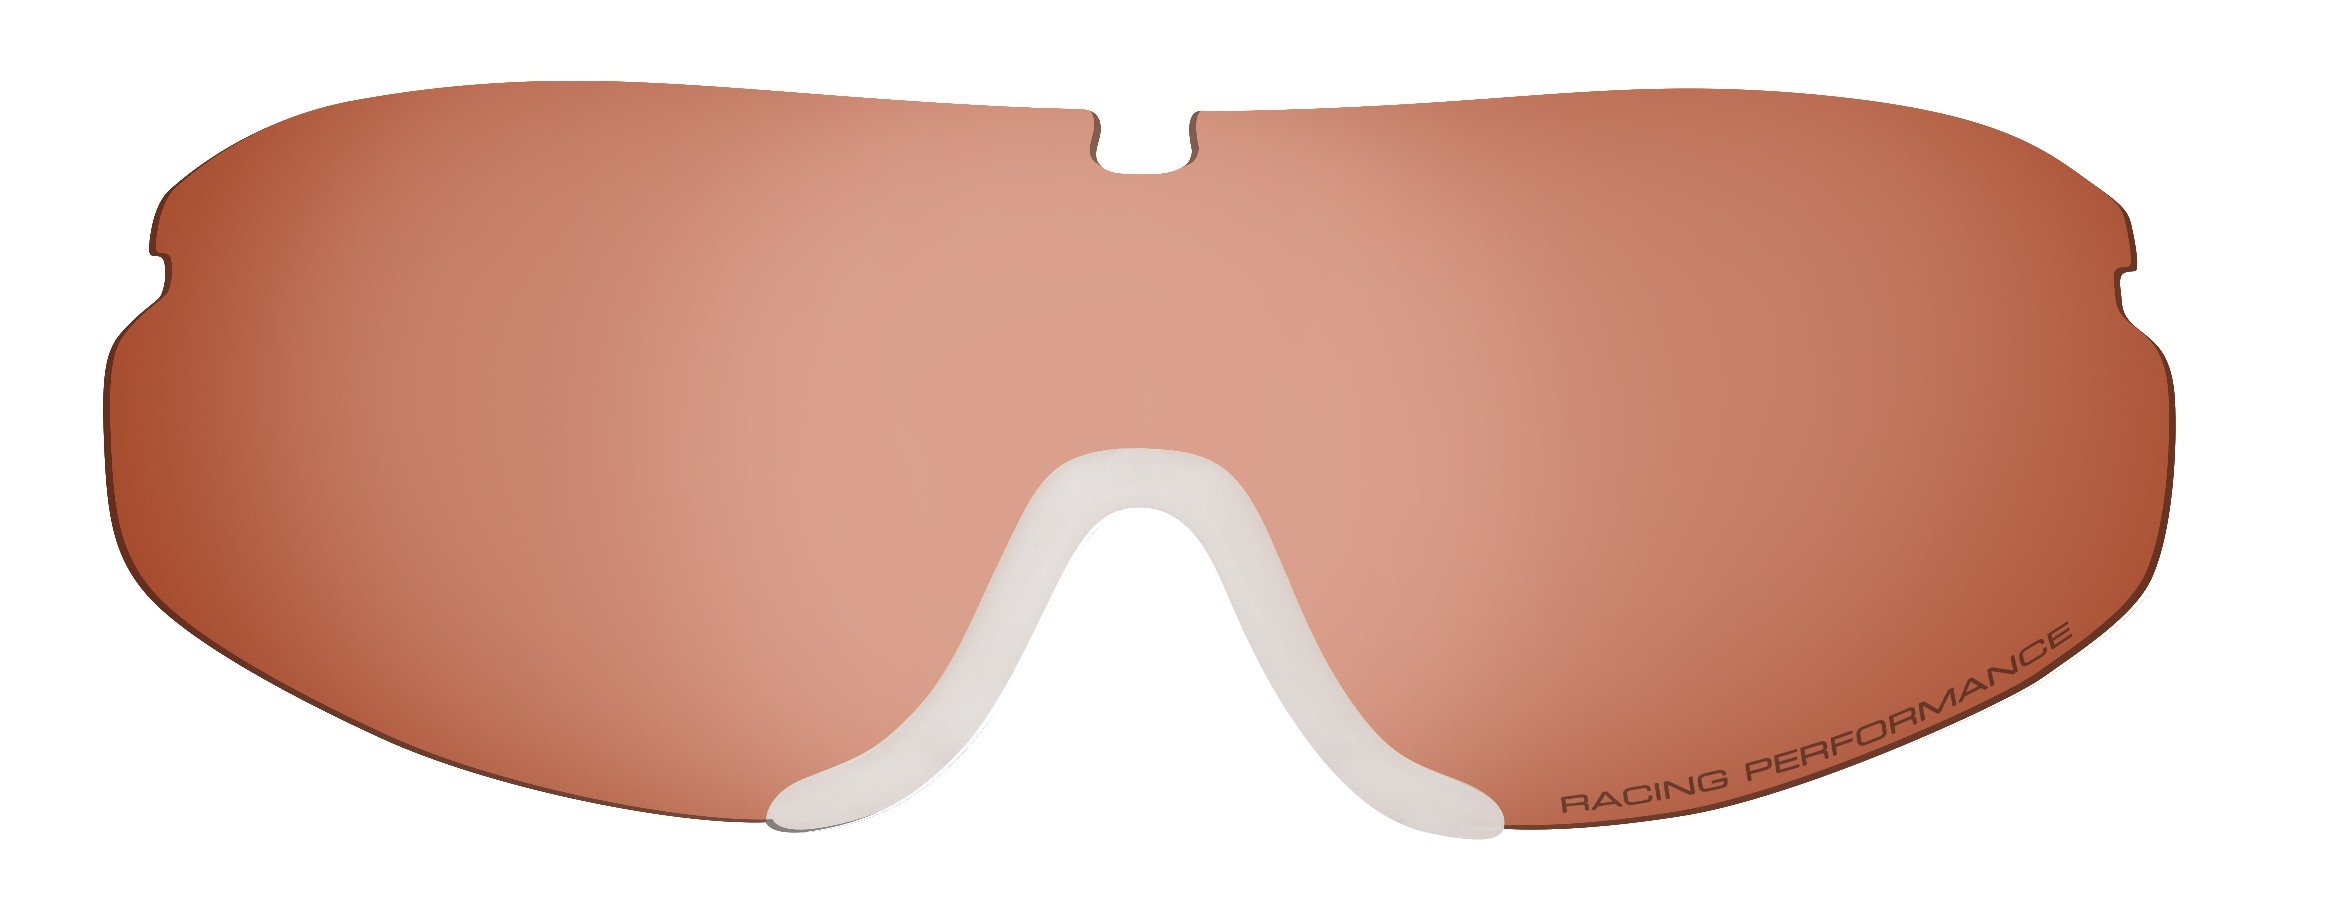 HTGL34/OR Náhradní čočka k lyžařským brýlím   CROSS HTG34 oranžová -